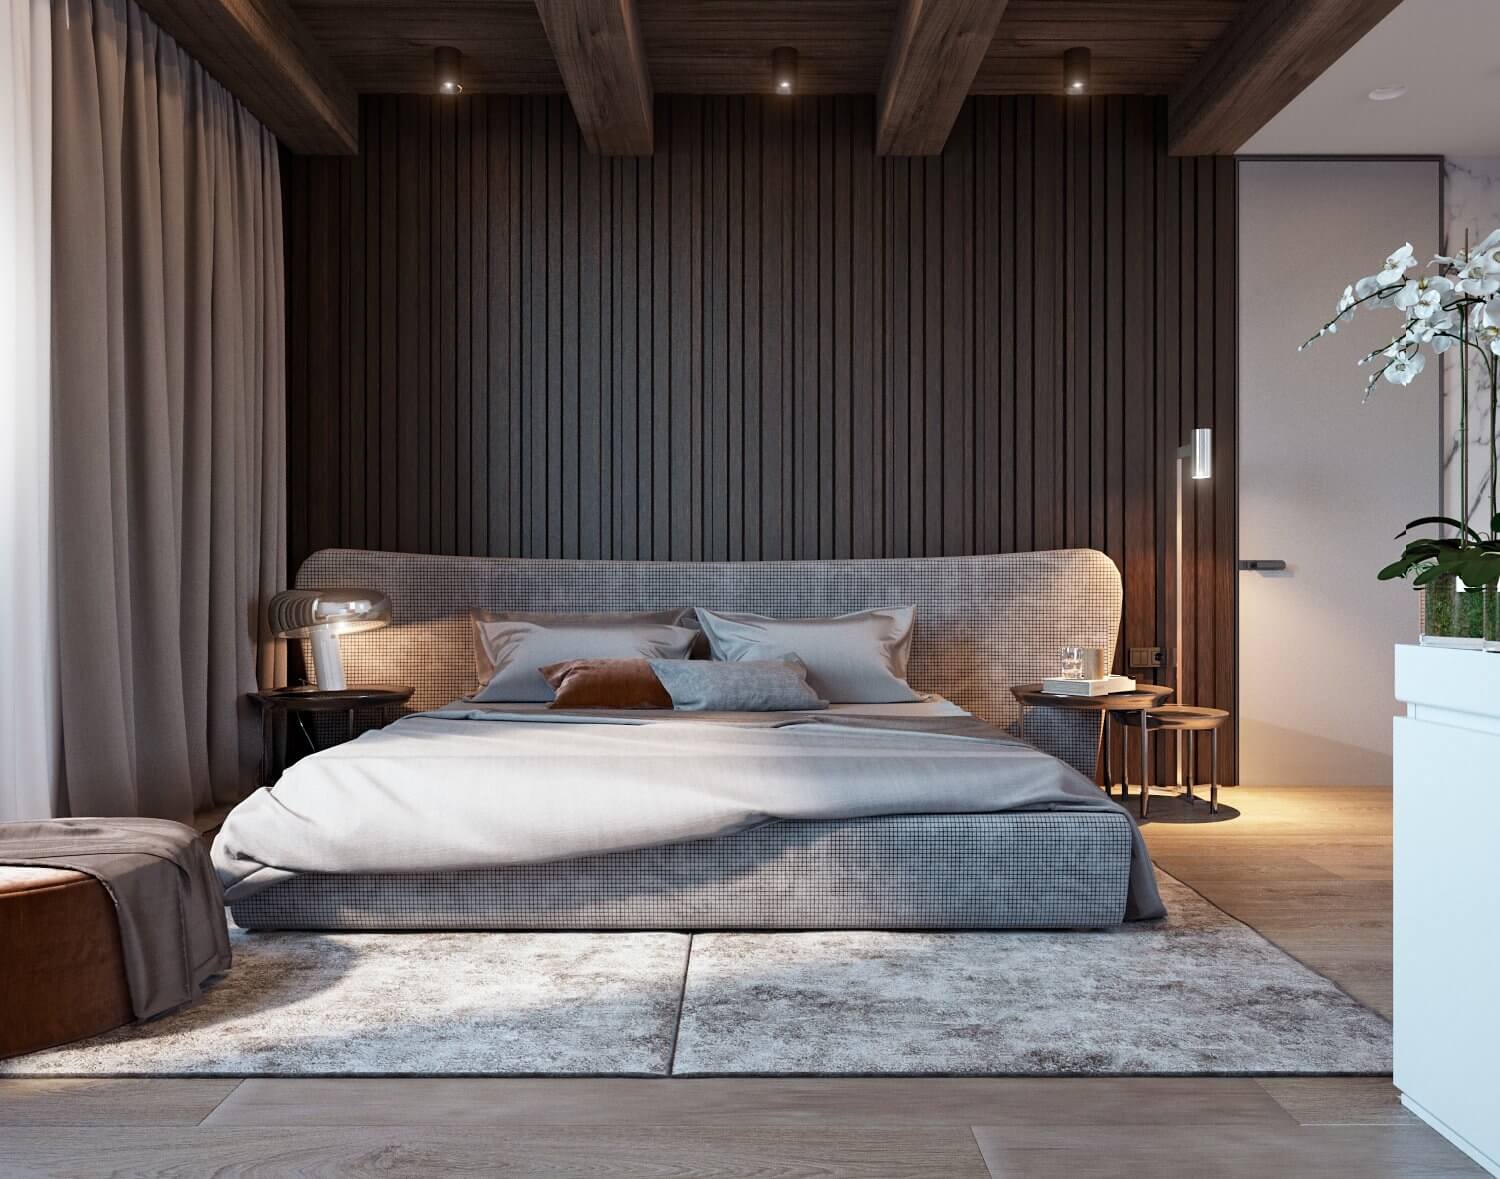 The Villa in Italy bedroom bed - cgi visualization